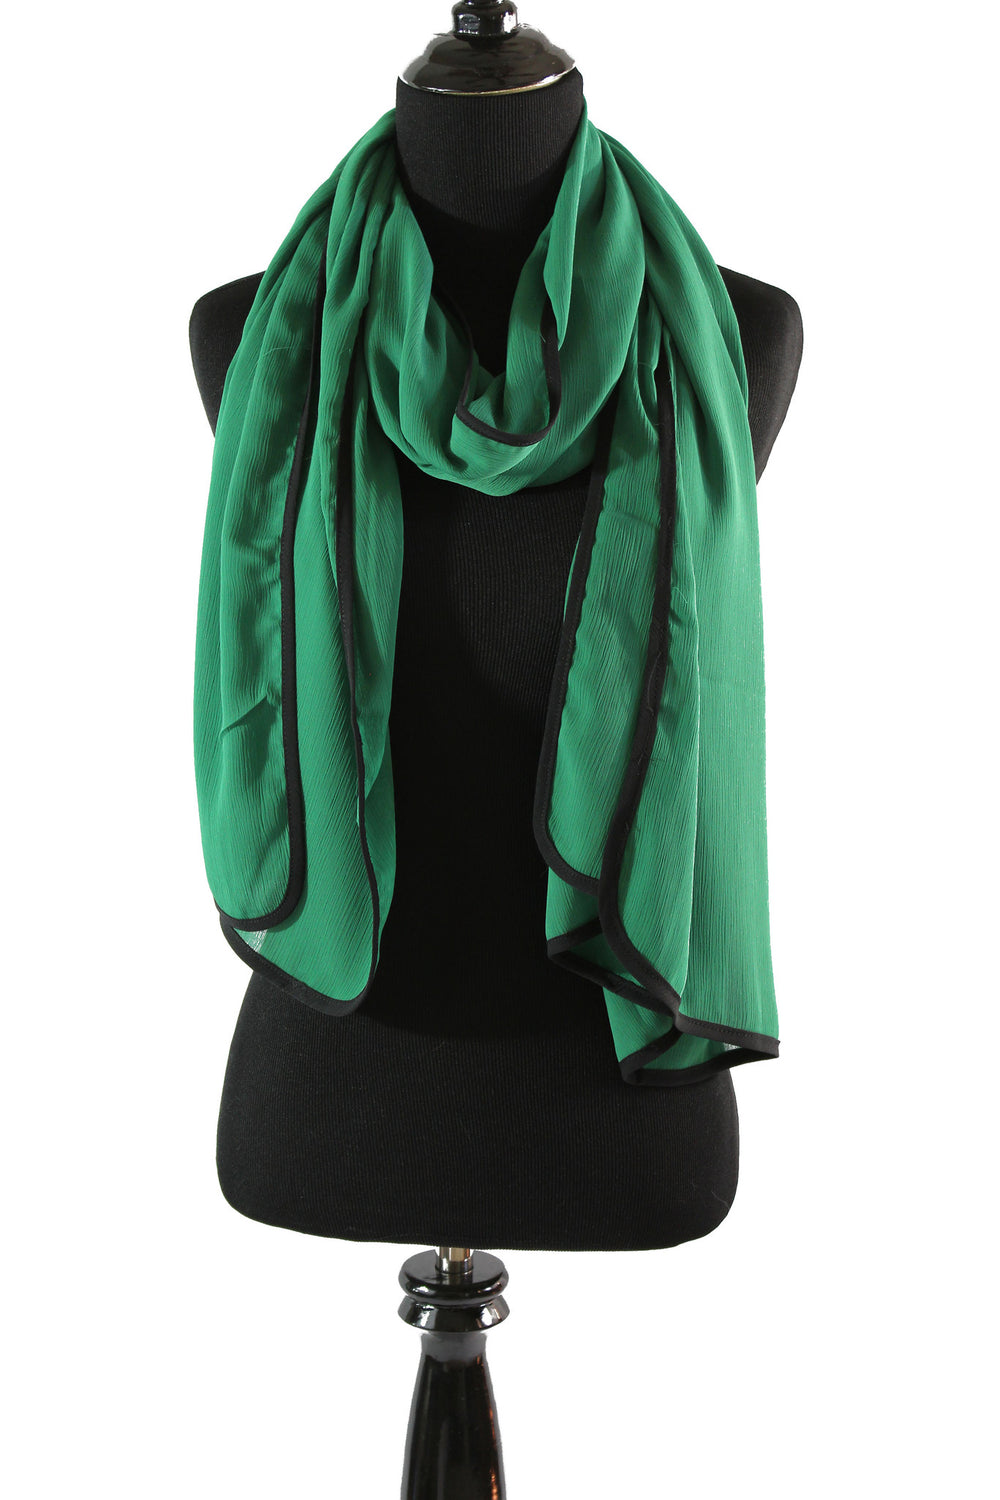 green chiffon hijab with a black trim along the edges